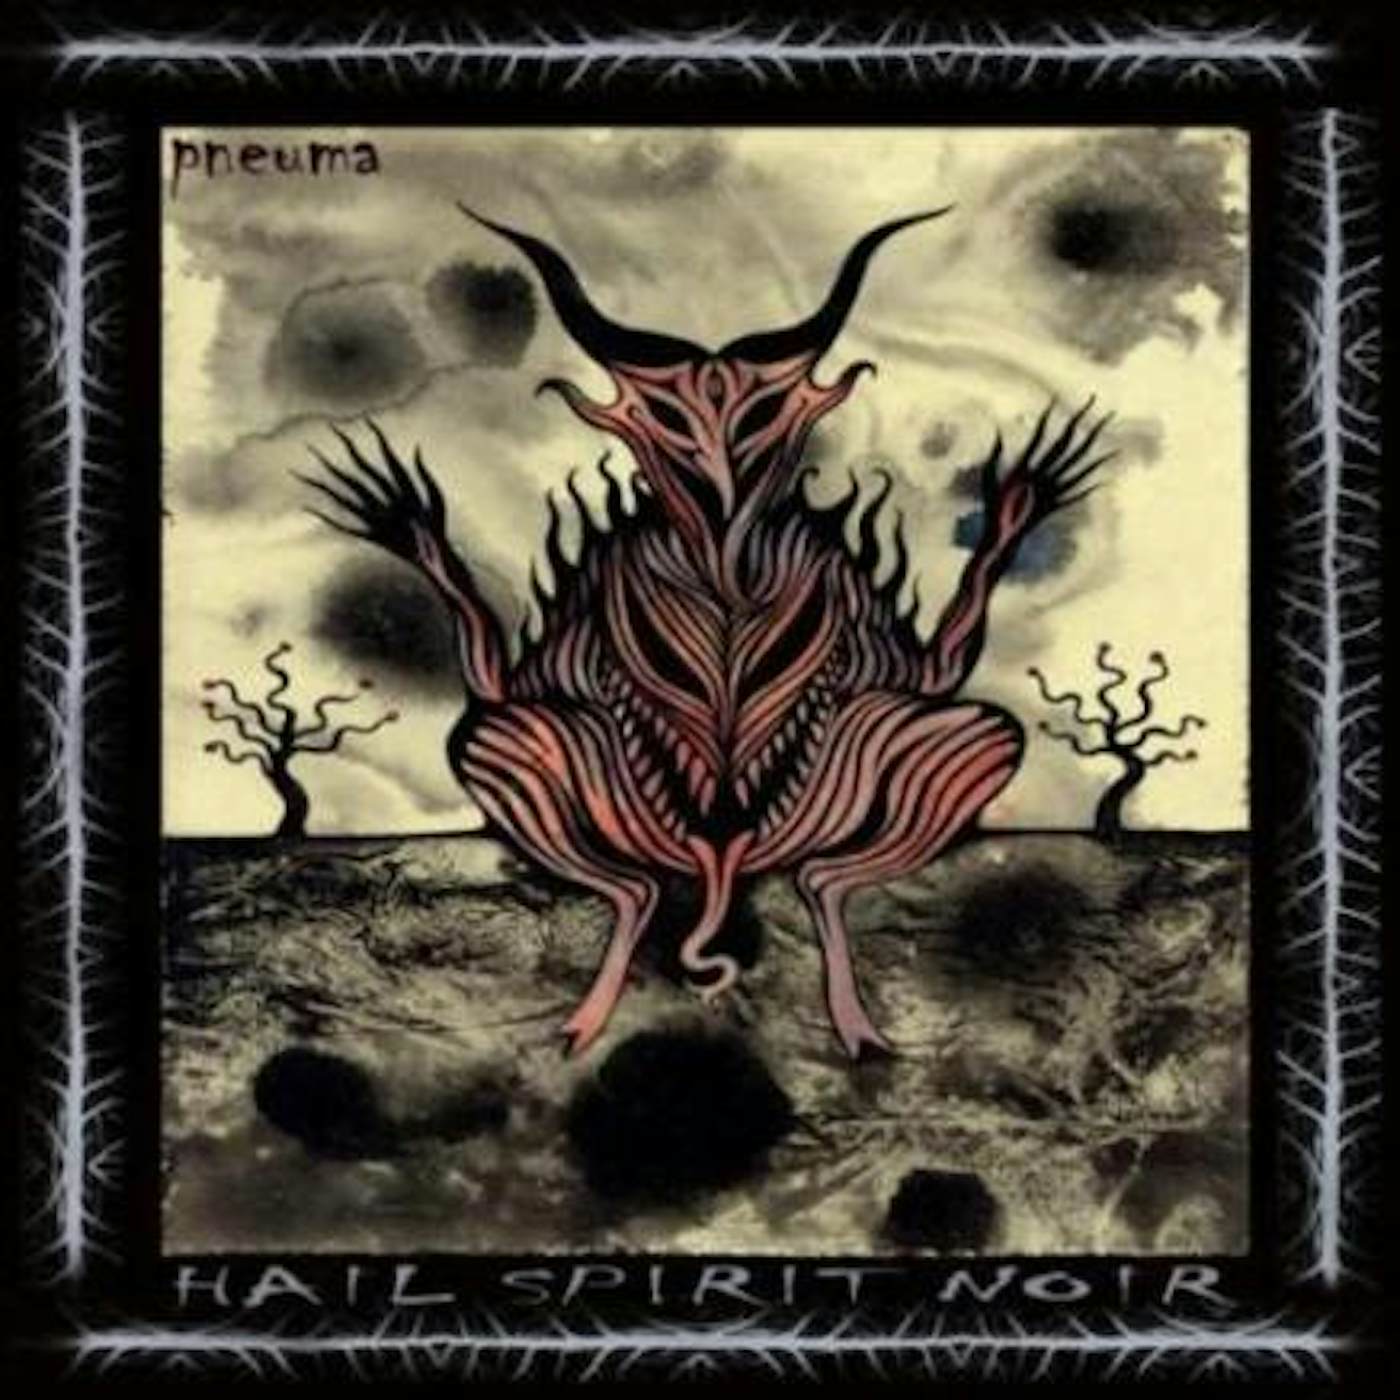 Hail Spirit Noir Pneuma Vinyl Record